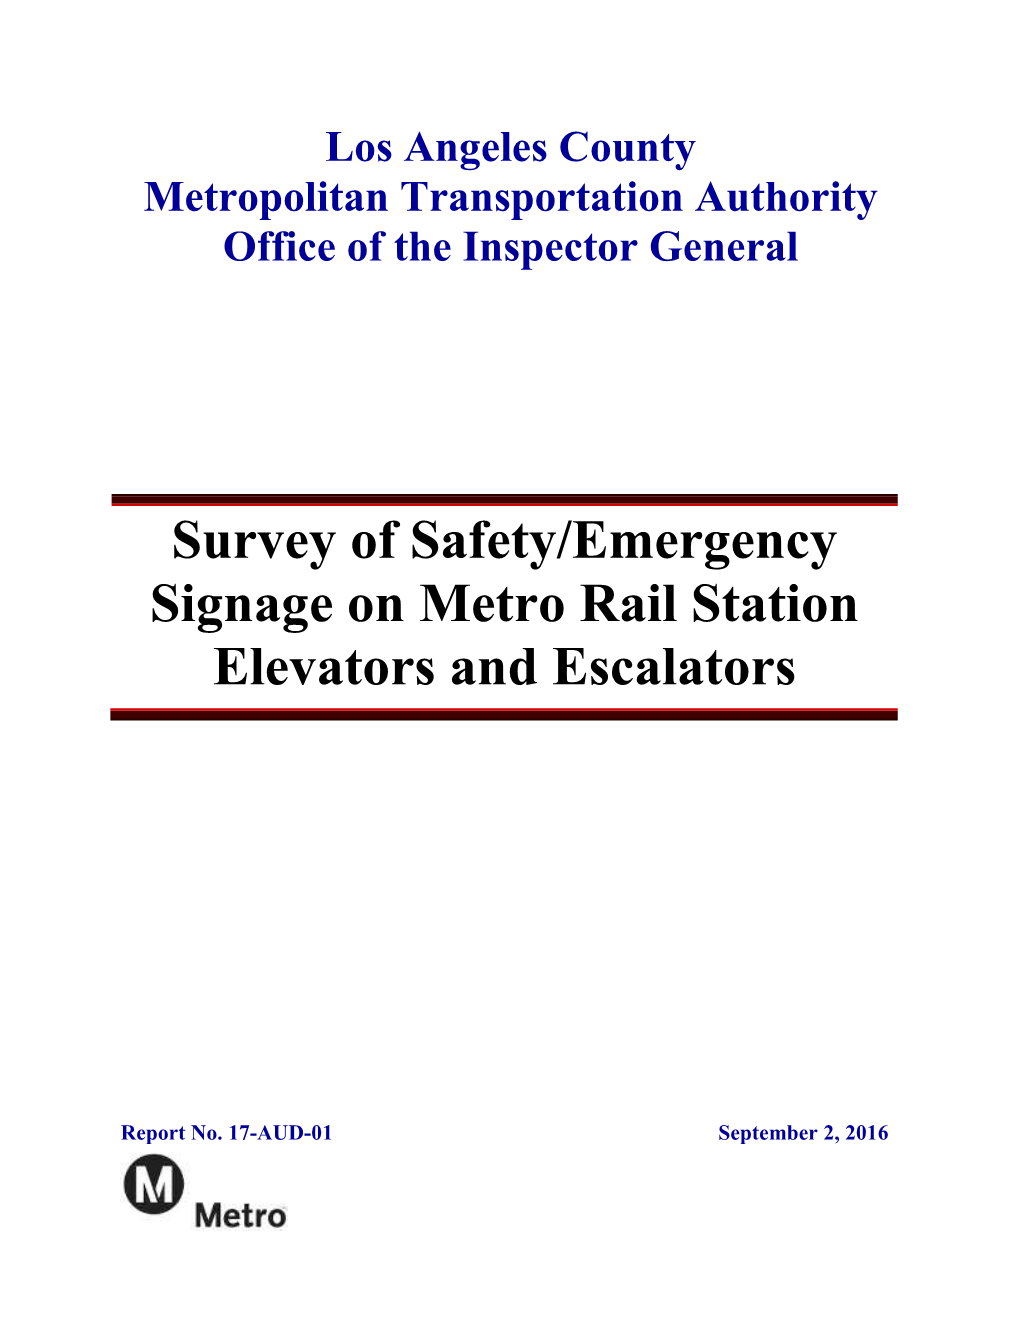 17-AUD-01 Report Survey of Rail Station Elevators-Escalators 09.02.16